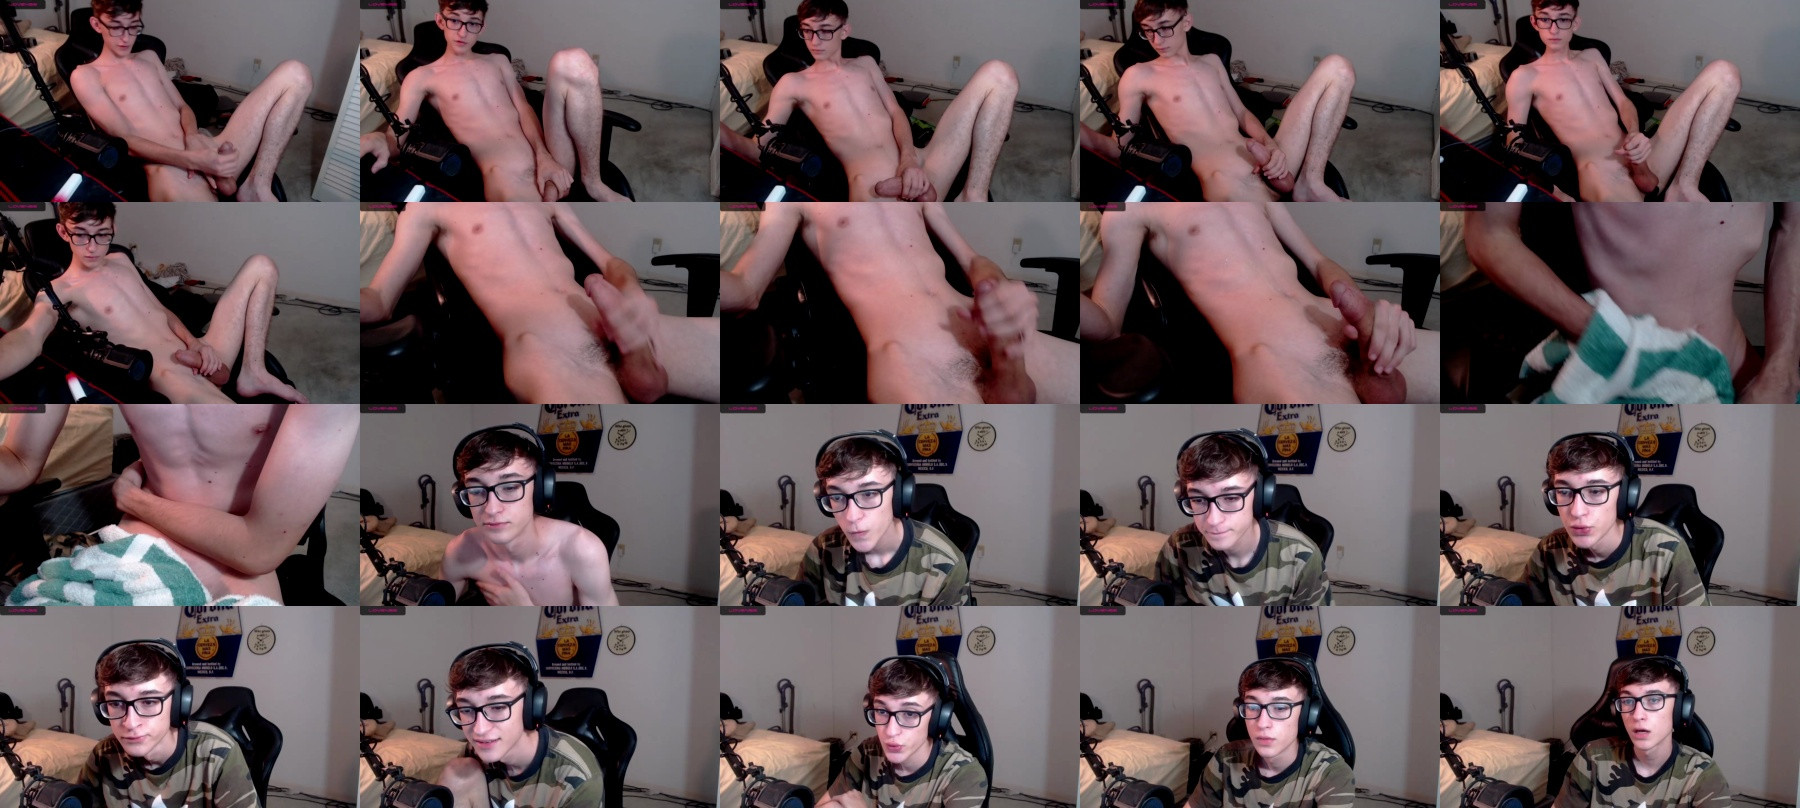 18yrboyhot  07-03-2021 Male Topless